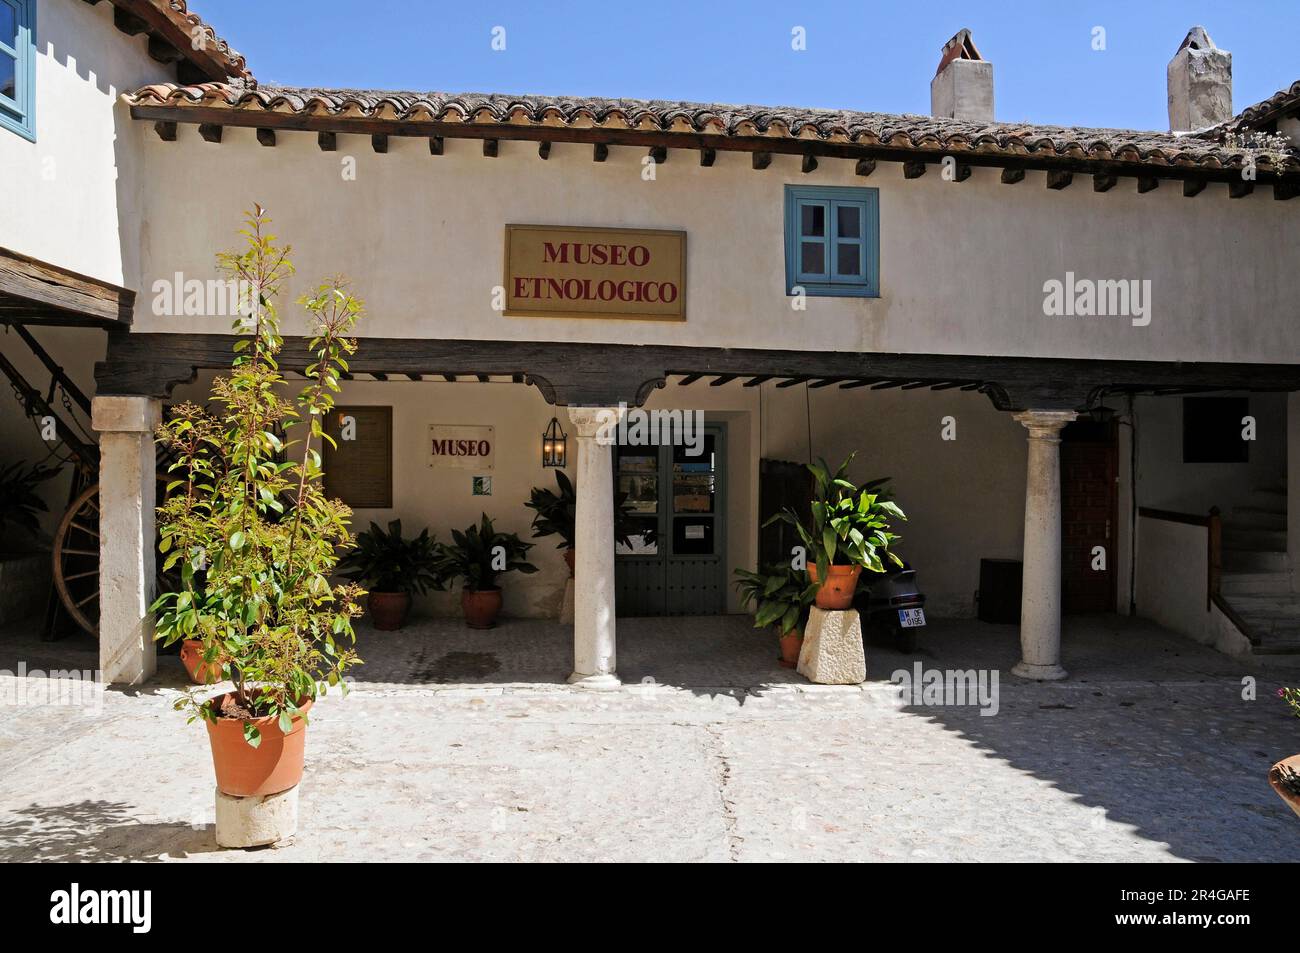 La Posada, ethnologisches Museum, Chinchon, Provinz Madrid, Spanien Stockfoto